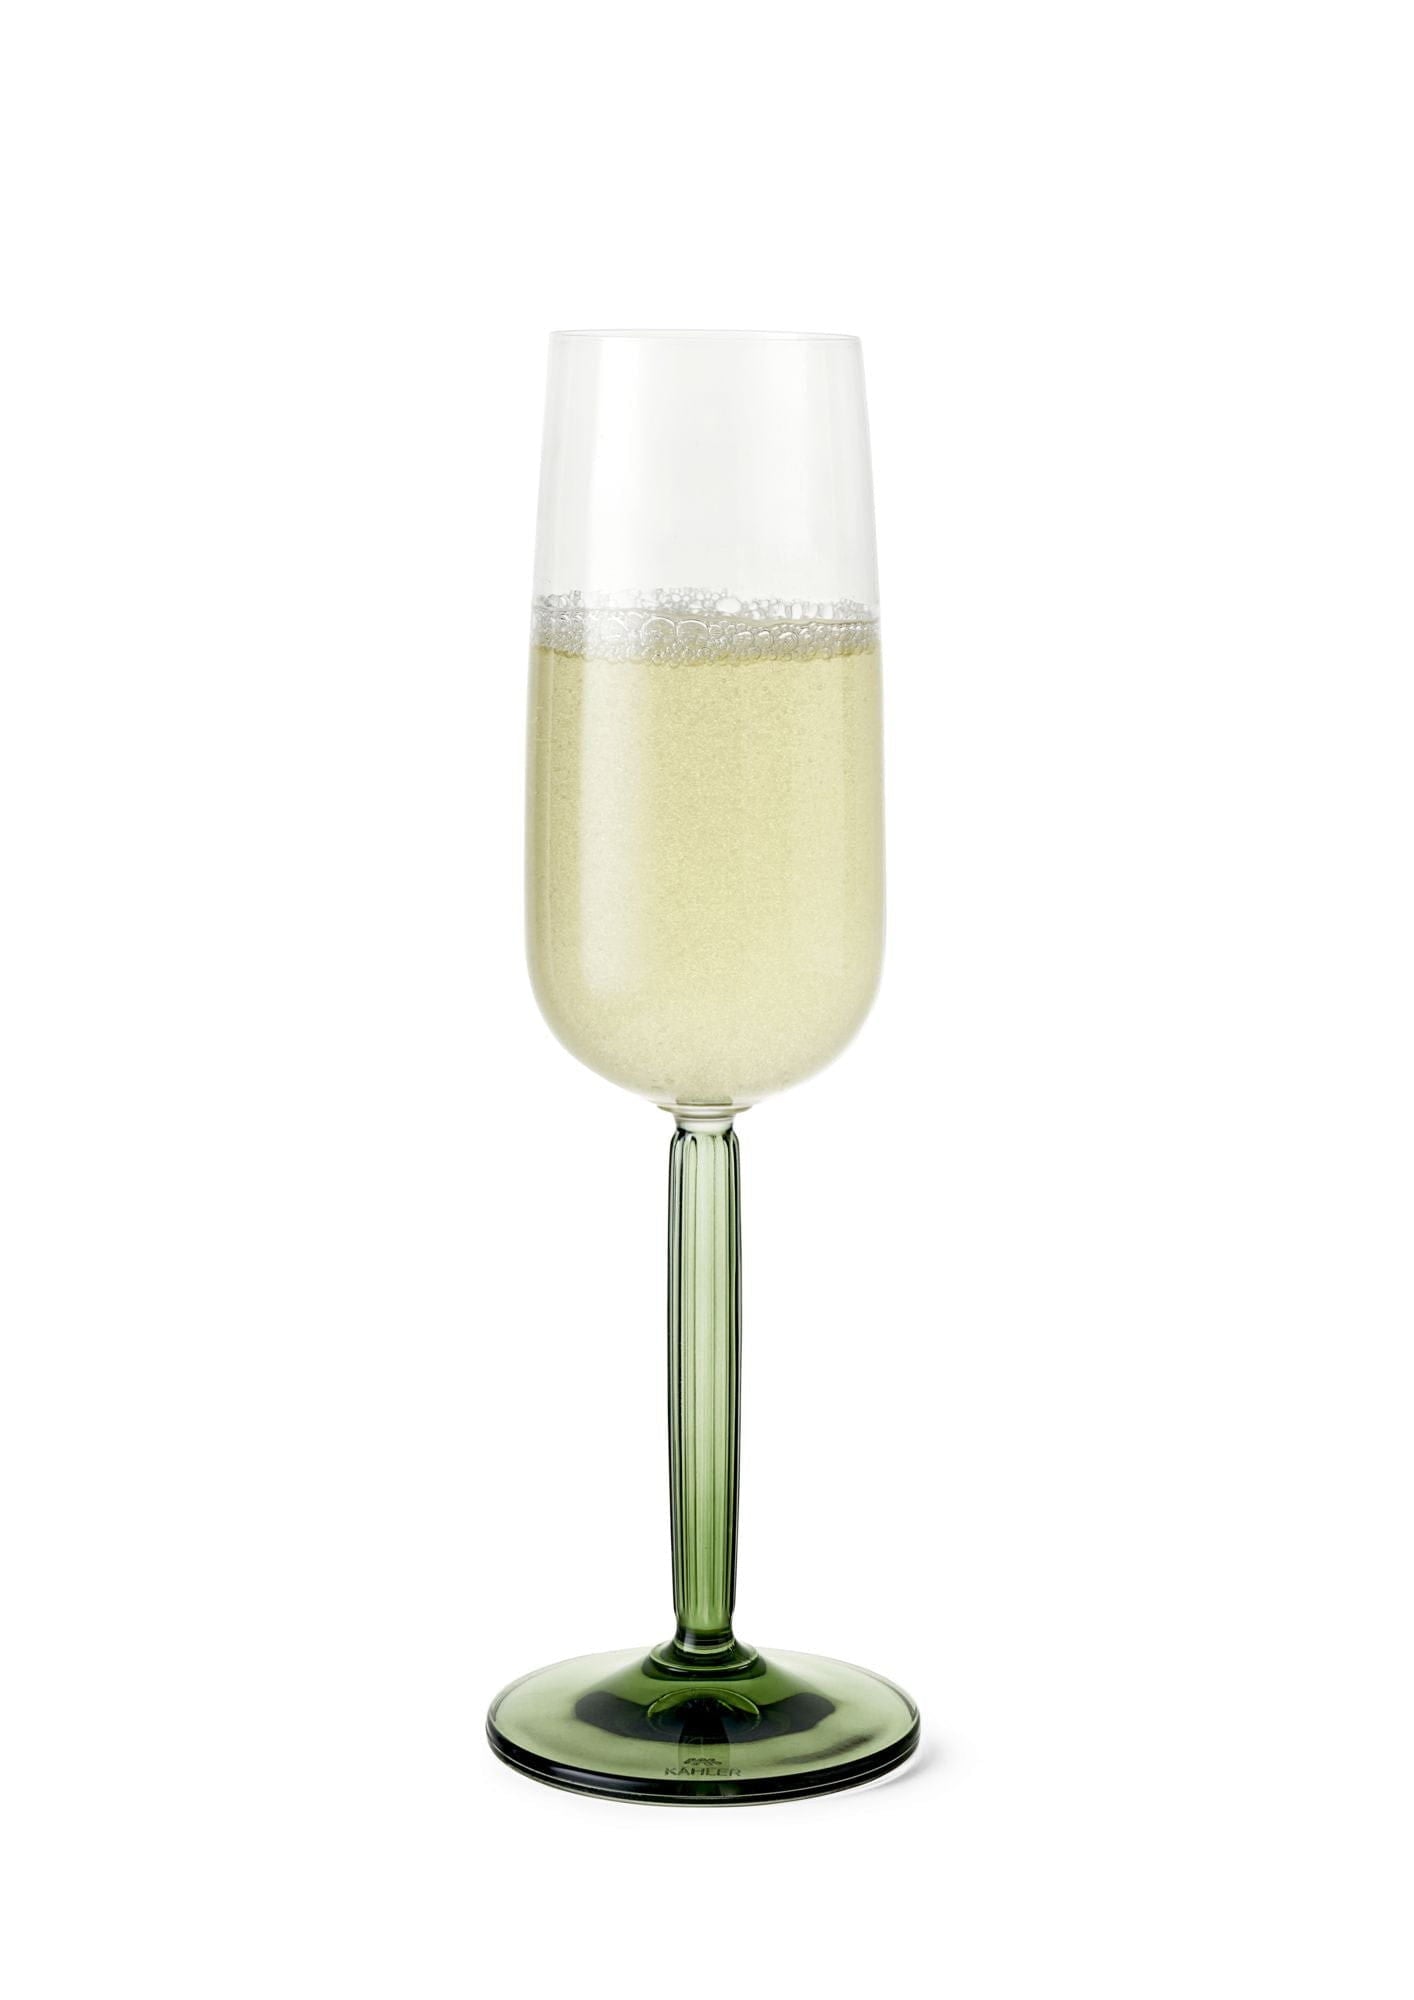 Kähler Hammershøi Champagnerglas Set von 240 ml, Grün